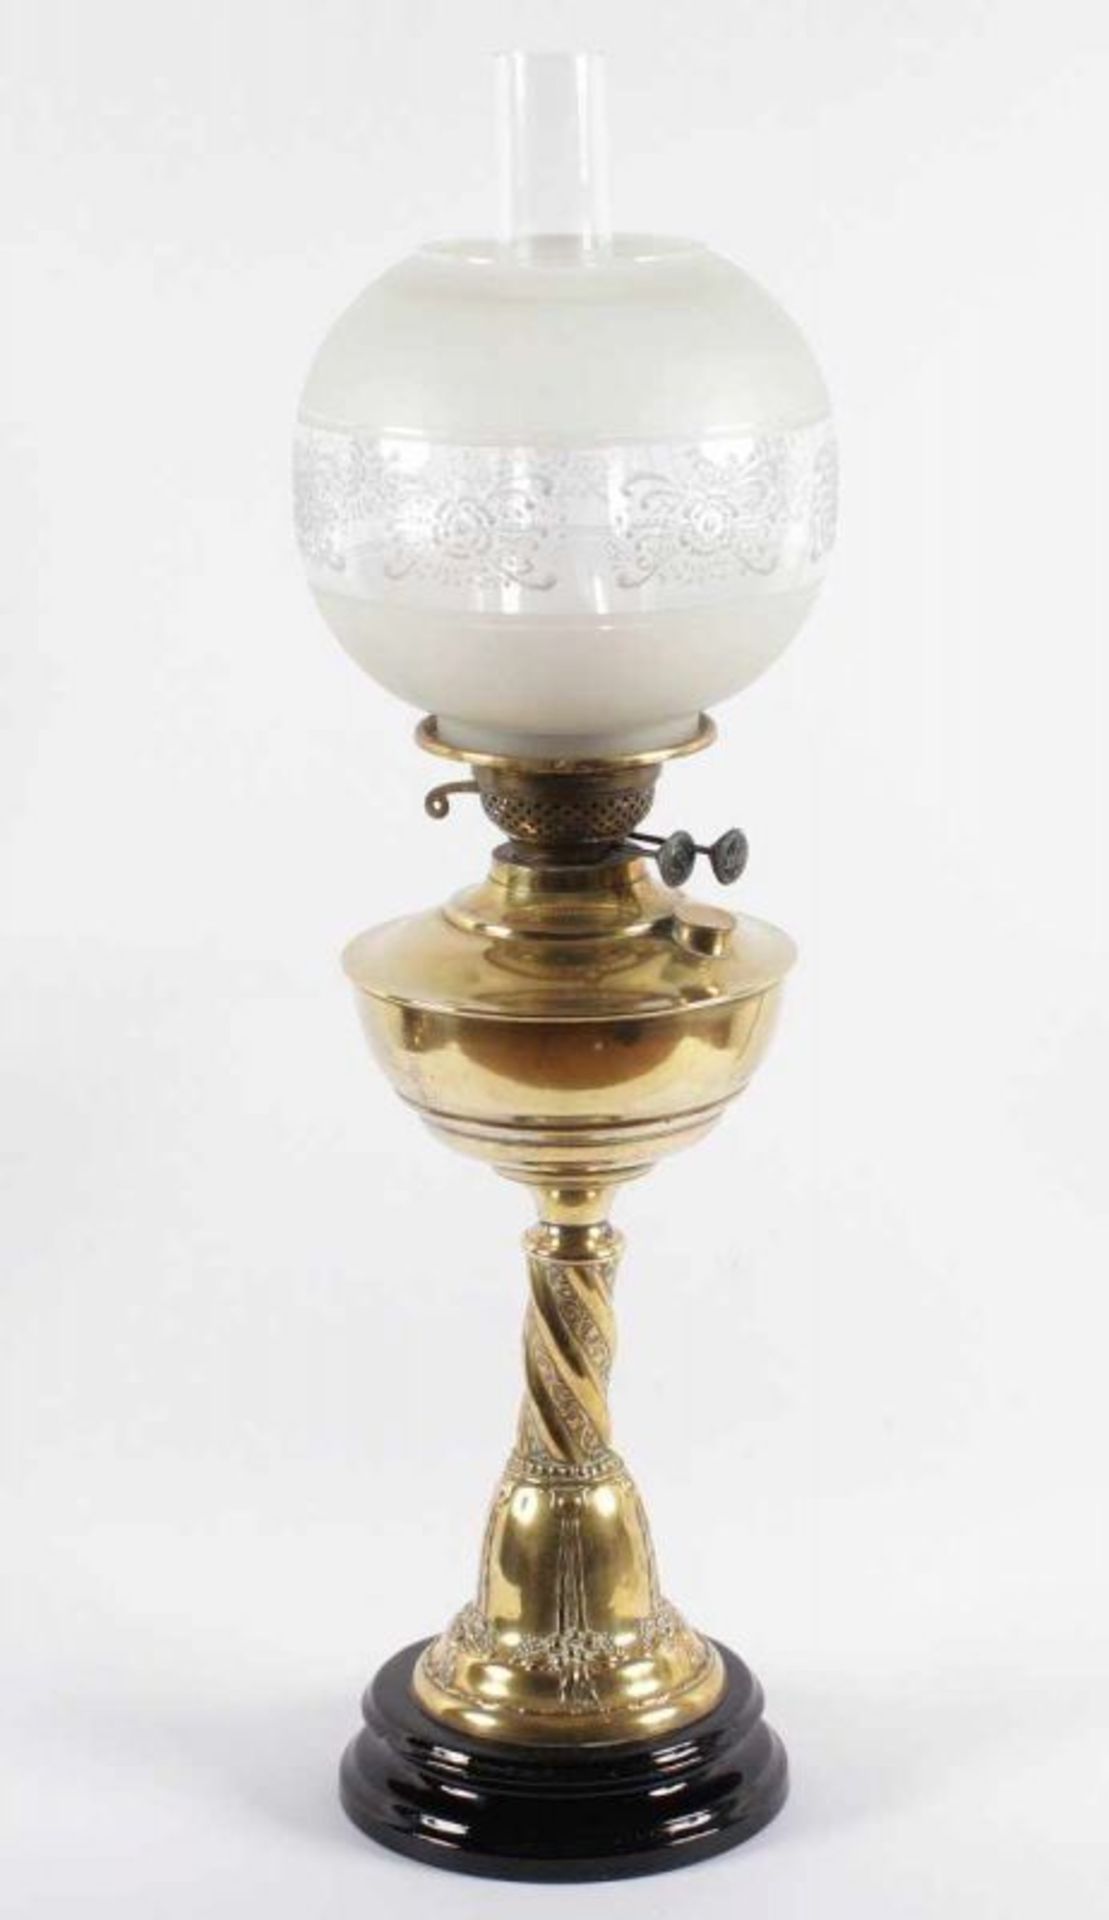 PETROLEUMLAMPE, Messing, Reliefdekor, Glasschirm, H 70, Keramiksockel min.best., DEUTSCH, um 1900